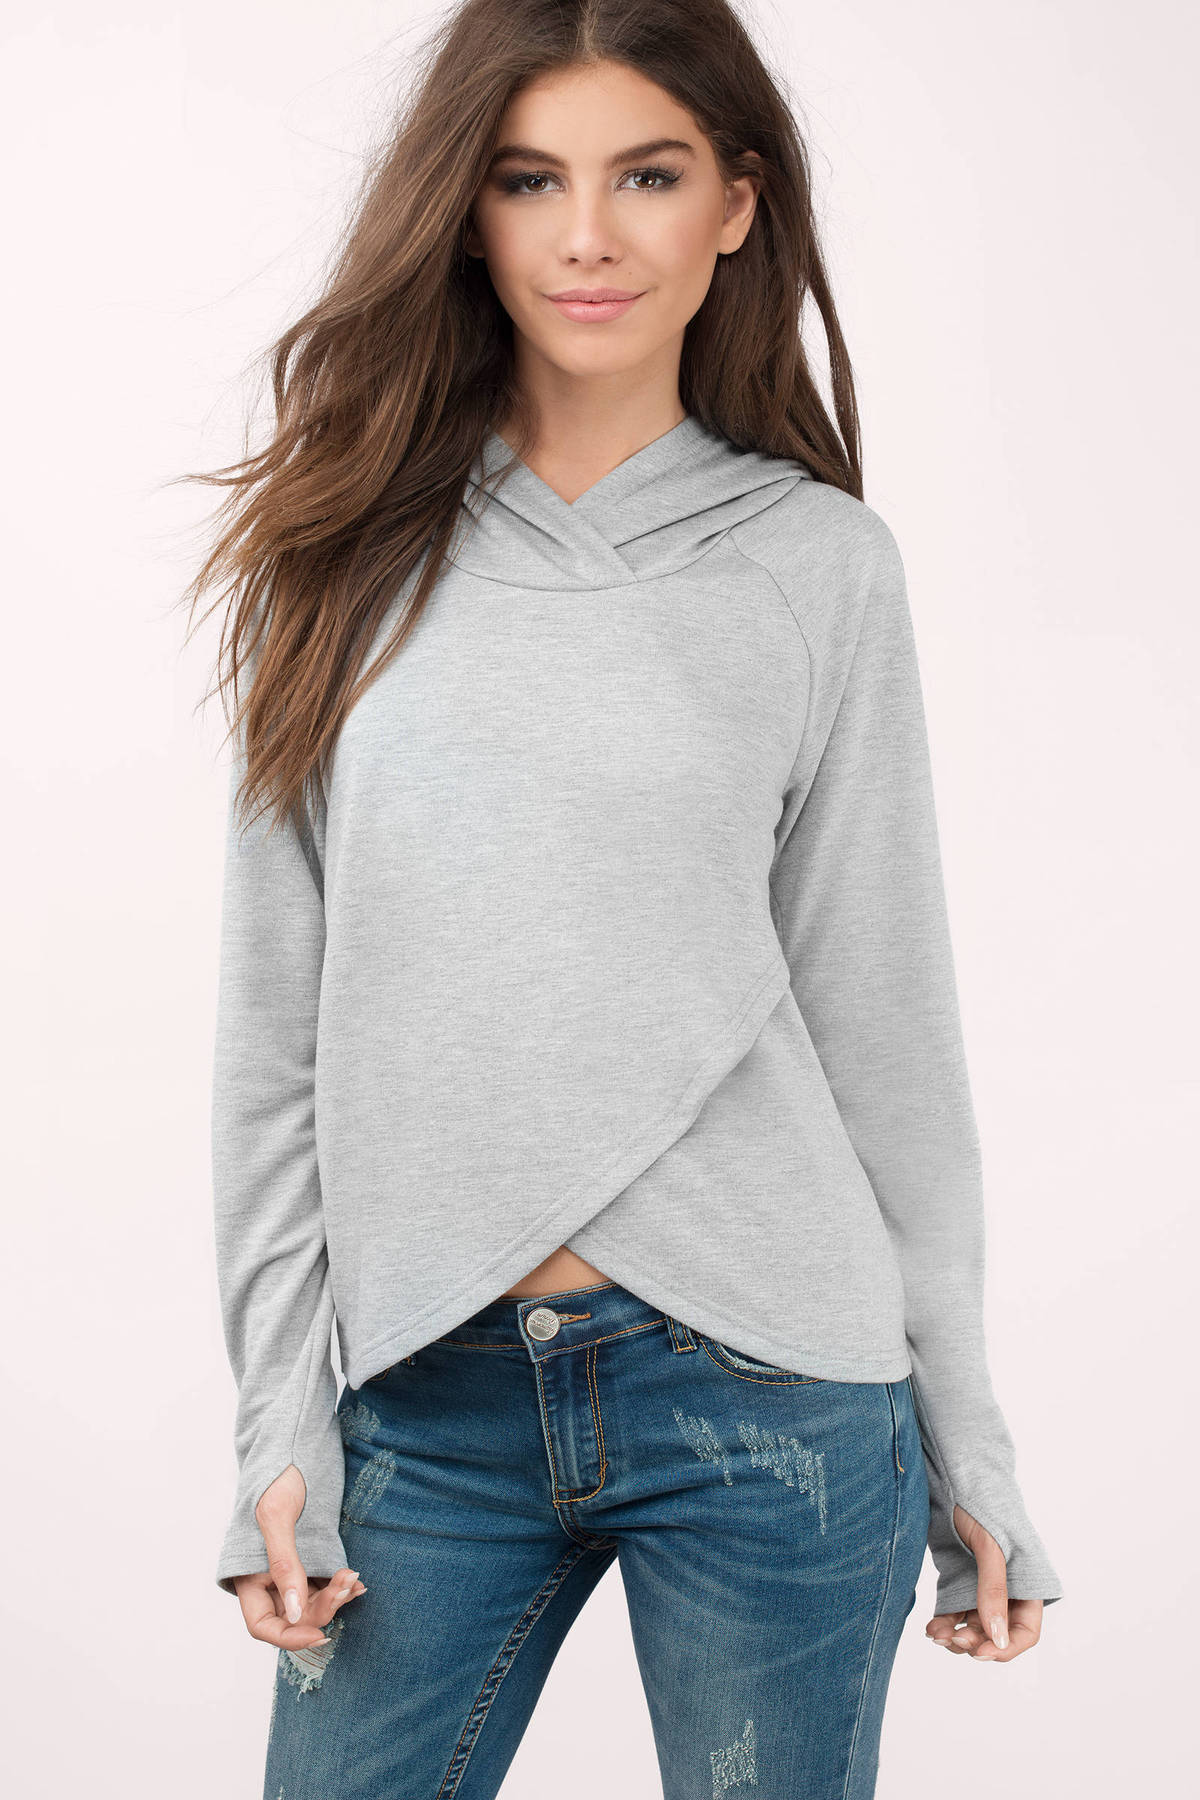 Cheap grey Sweatshirt - Surplice Sweatshirt - Heather Grey Hoodie